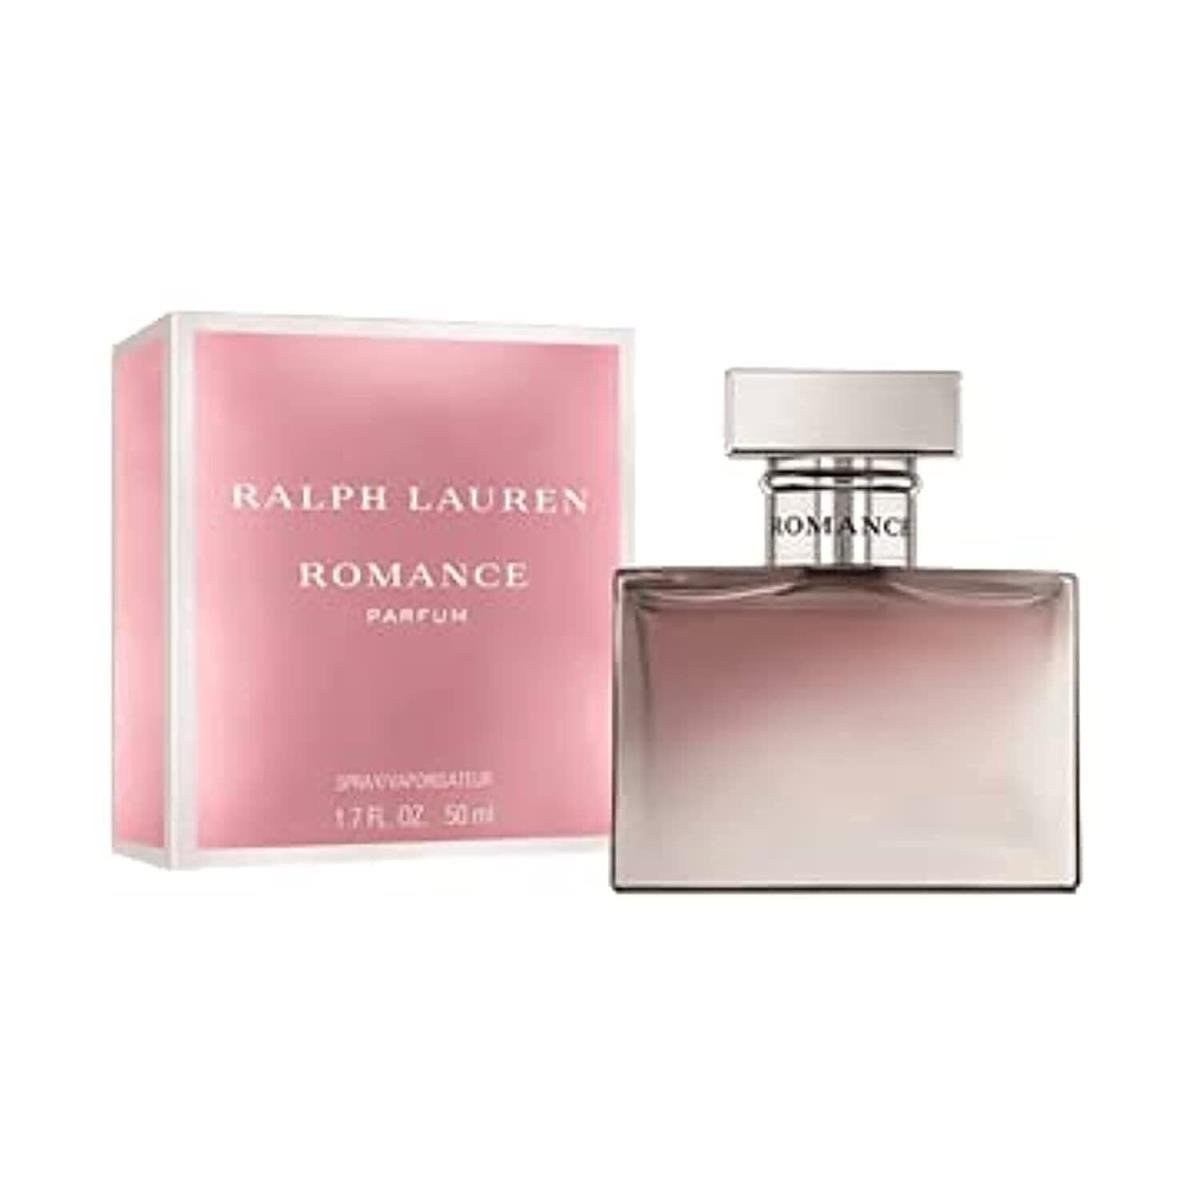 Romance 1.7 Oz Parfum Spray by Ralph Lauren Box For Women